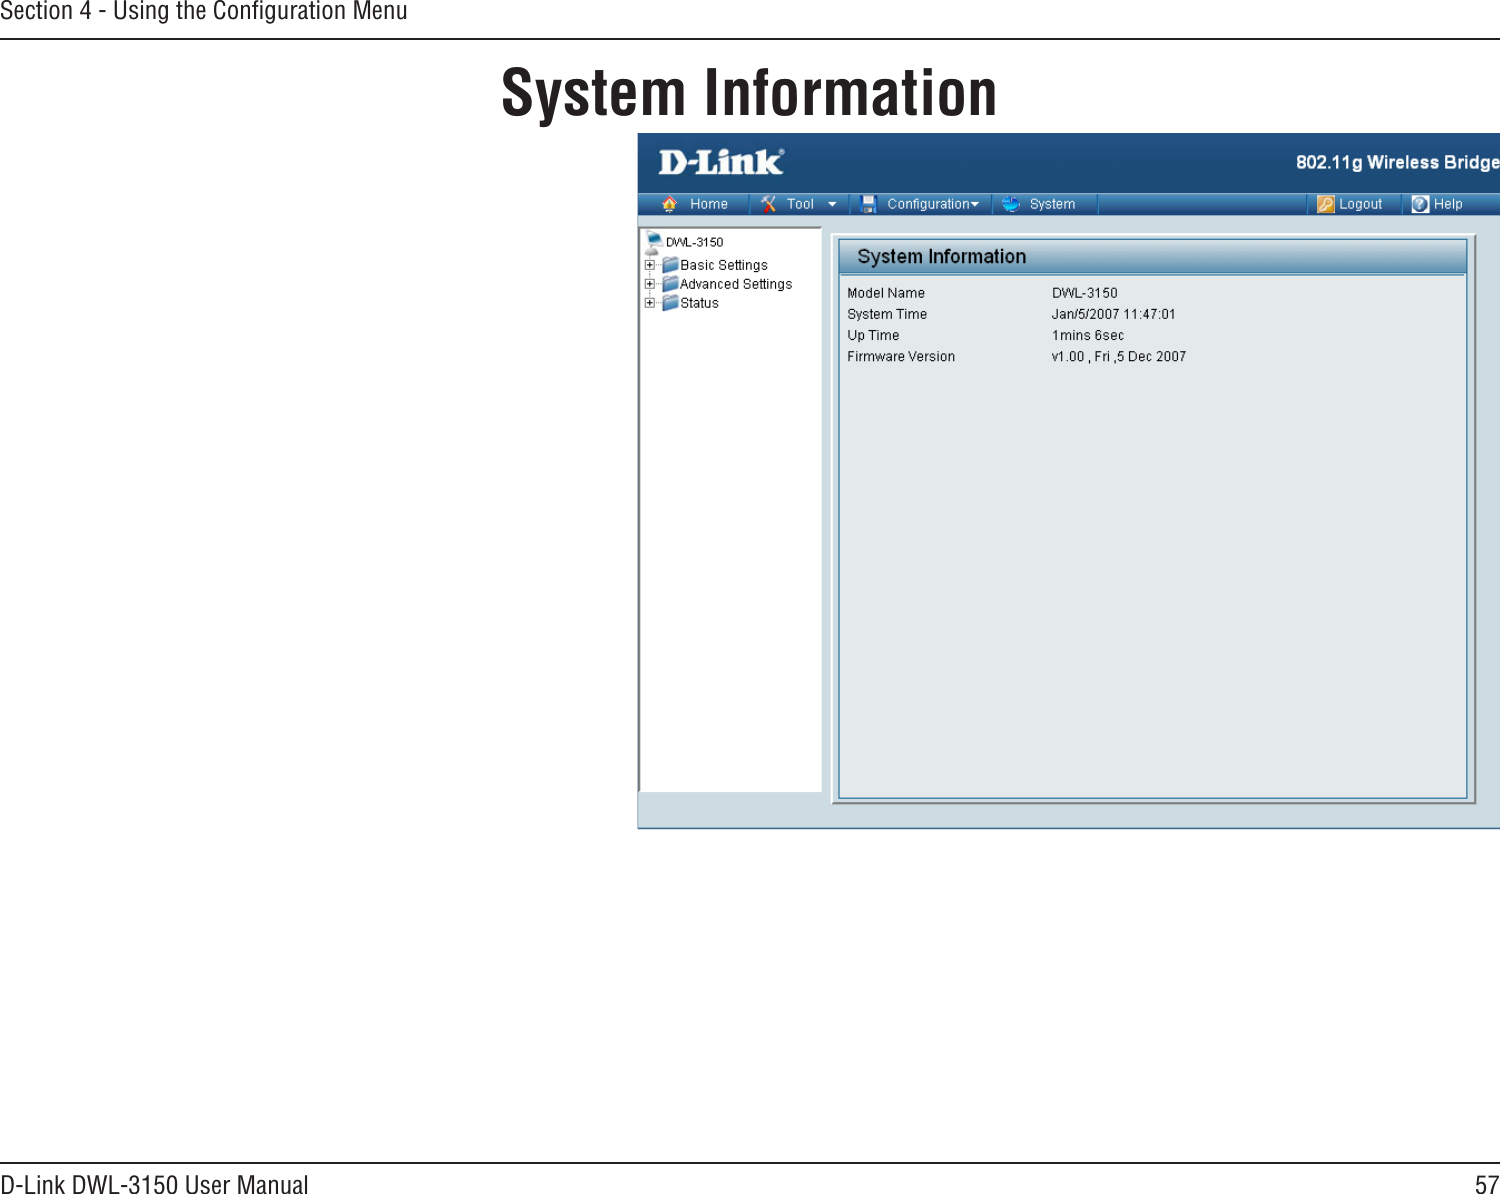 57D-Link DWL-3150 User ManualSection 4 - Using the Conﬁguration MenuSystem Information